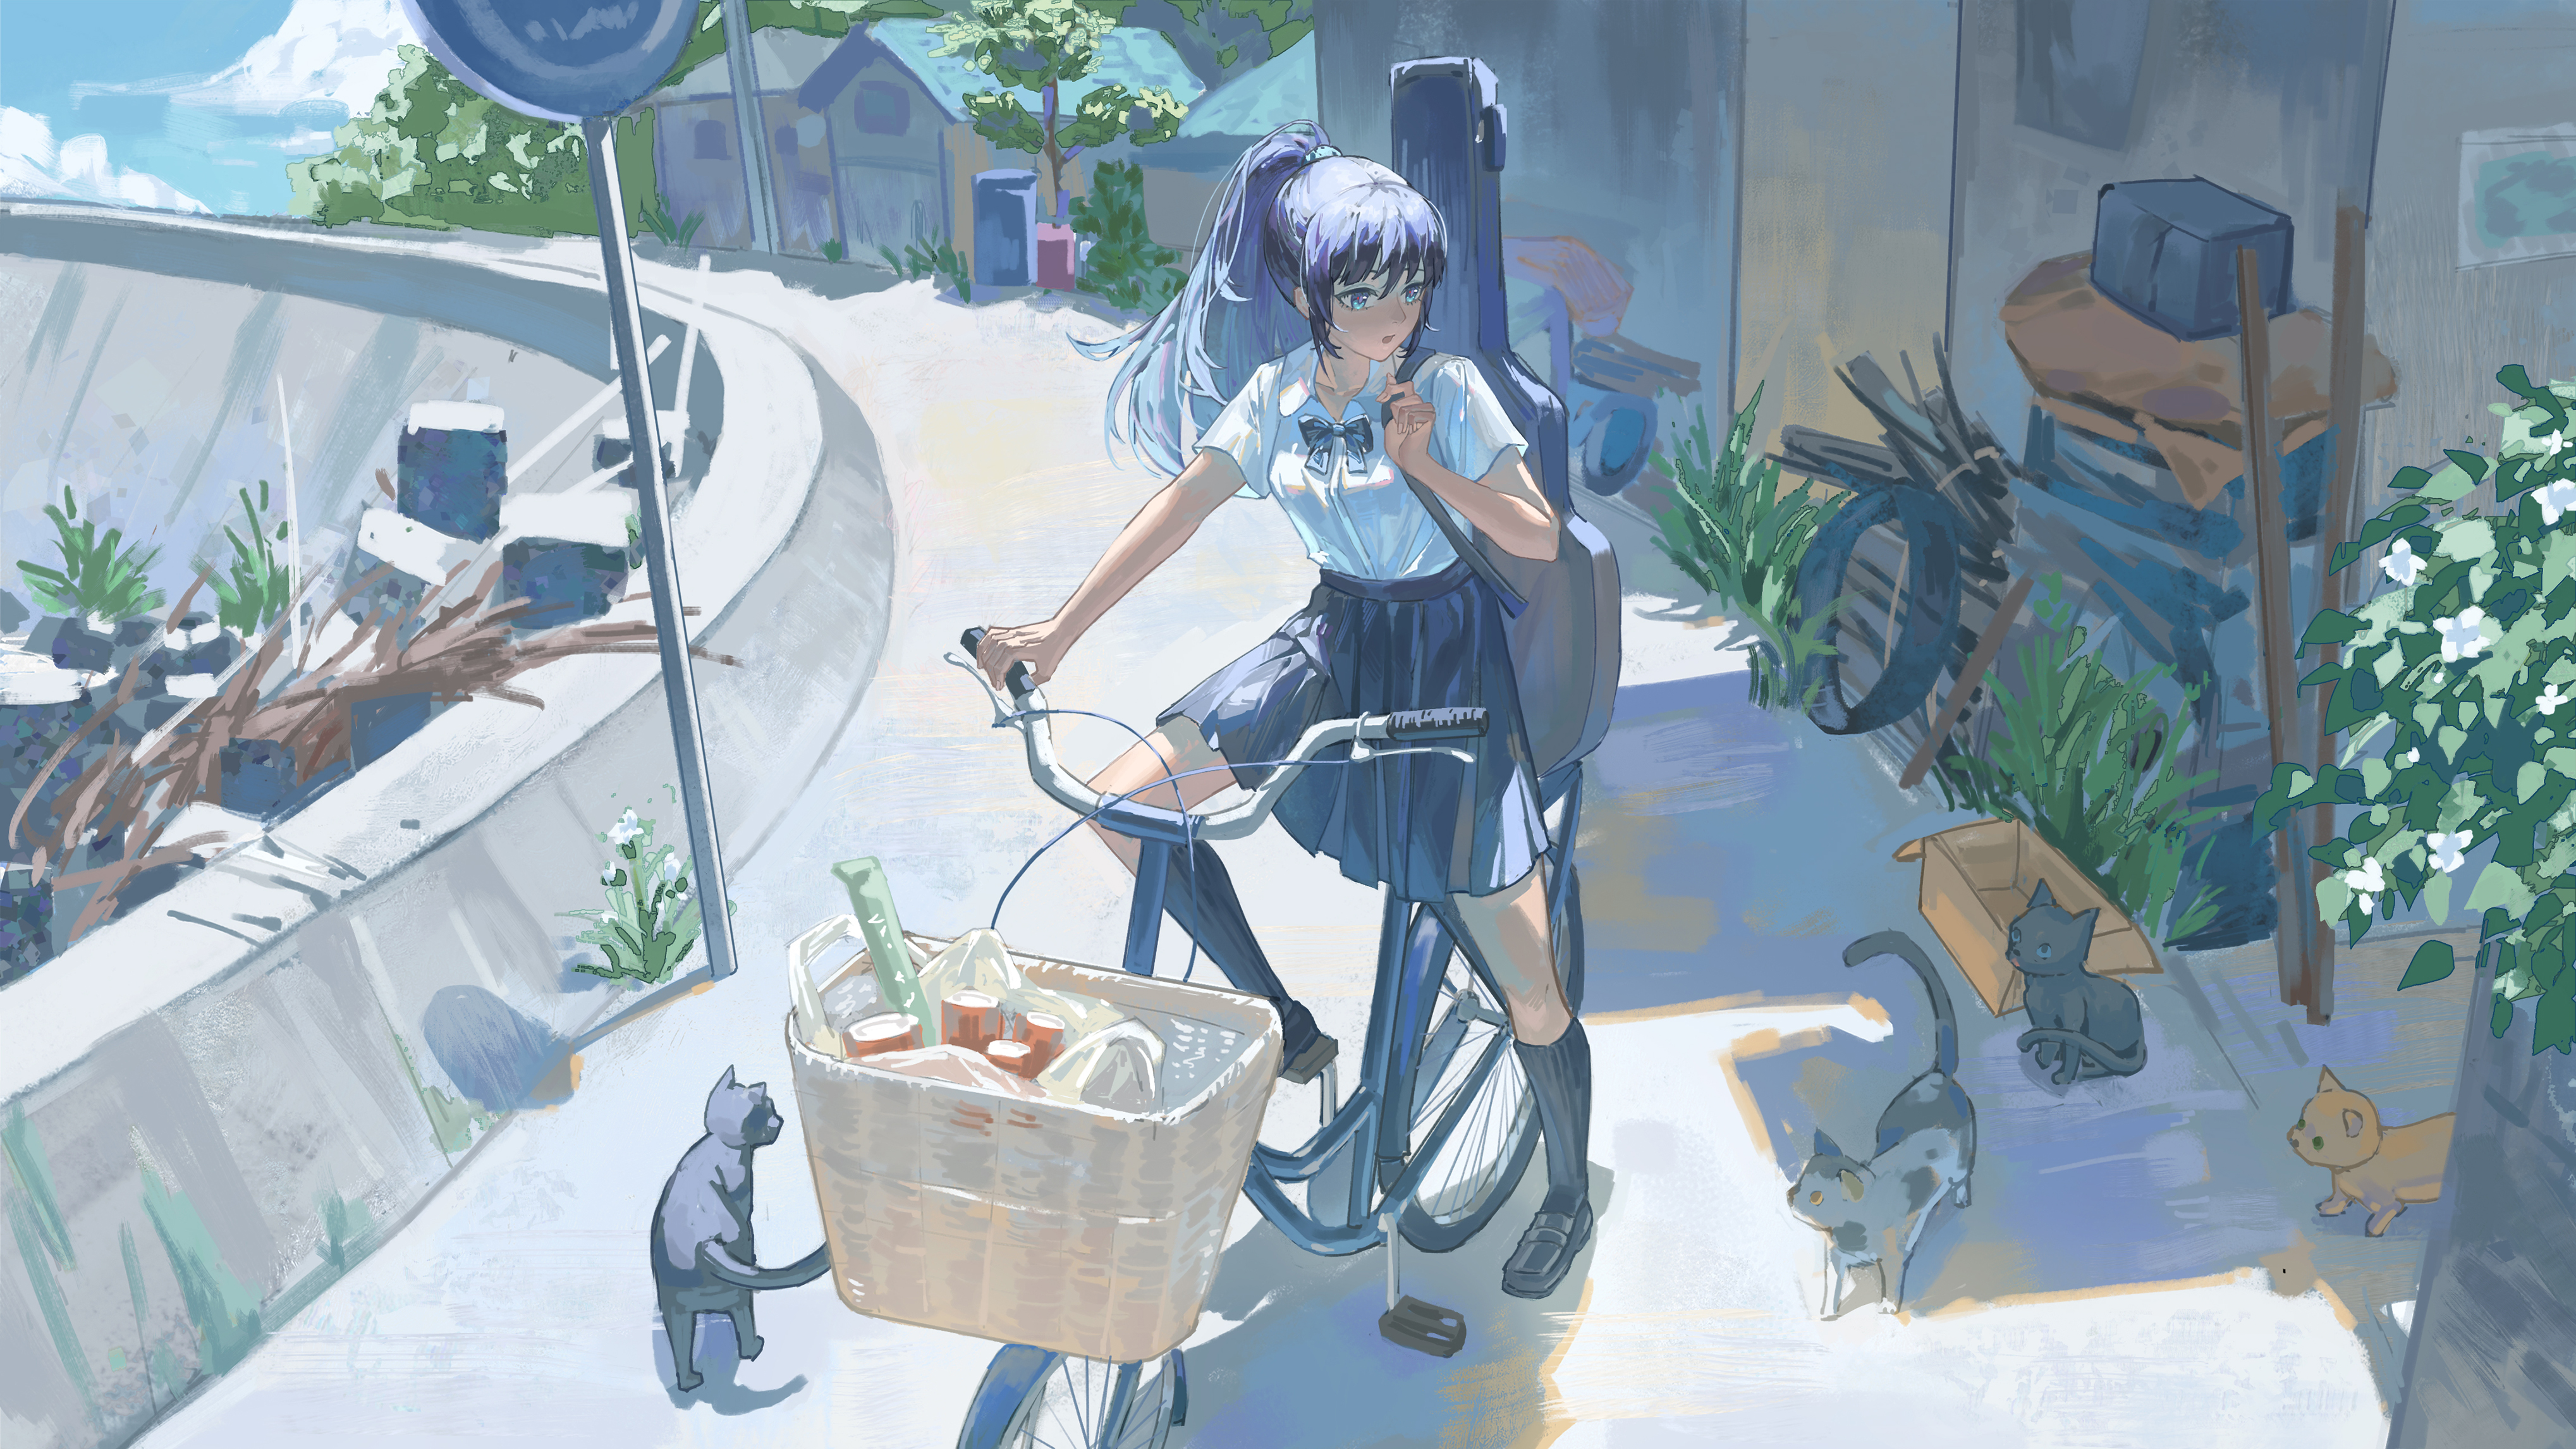 Anime Anime Girls Bicycle Bow Tie Schoolgirl School Uniform Sky Clouds Long Hair Ponytail Cats Anima 4075x2292